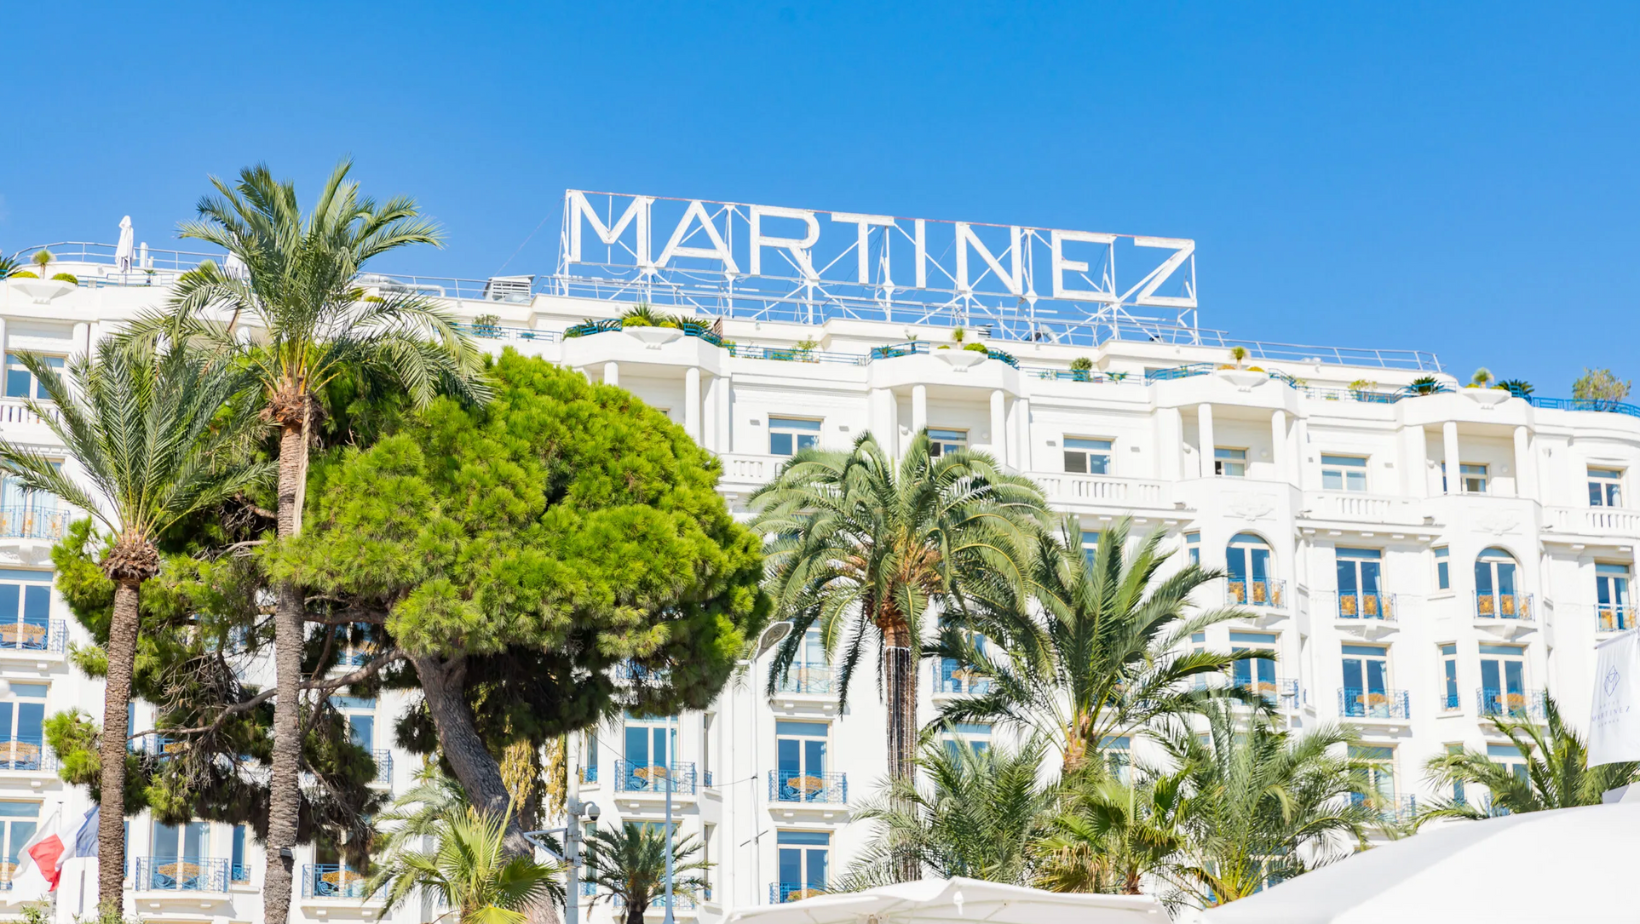 Histoires de Parfums at The Martinez Hotel for Cannes Film Festival